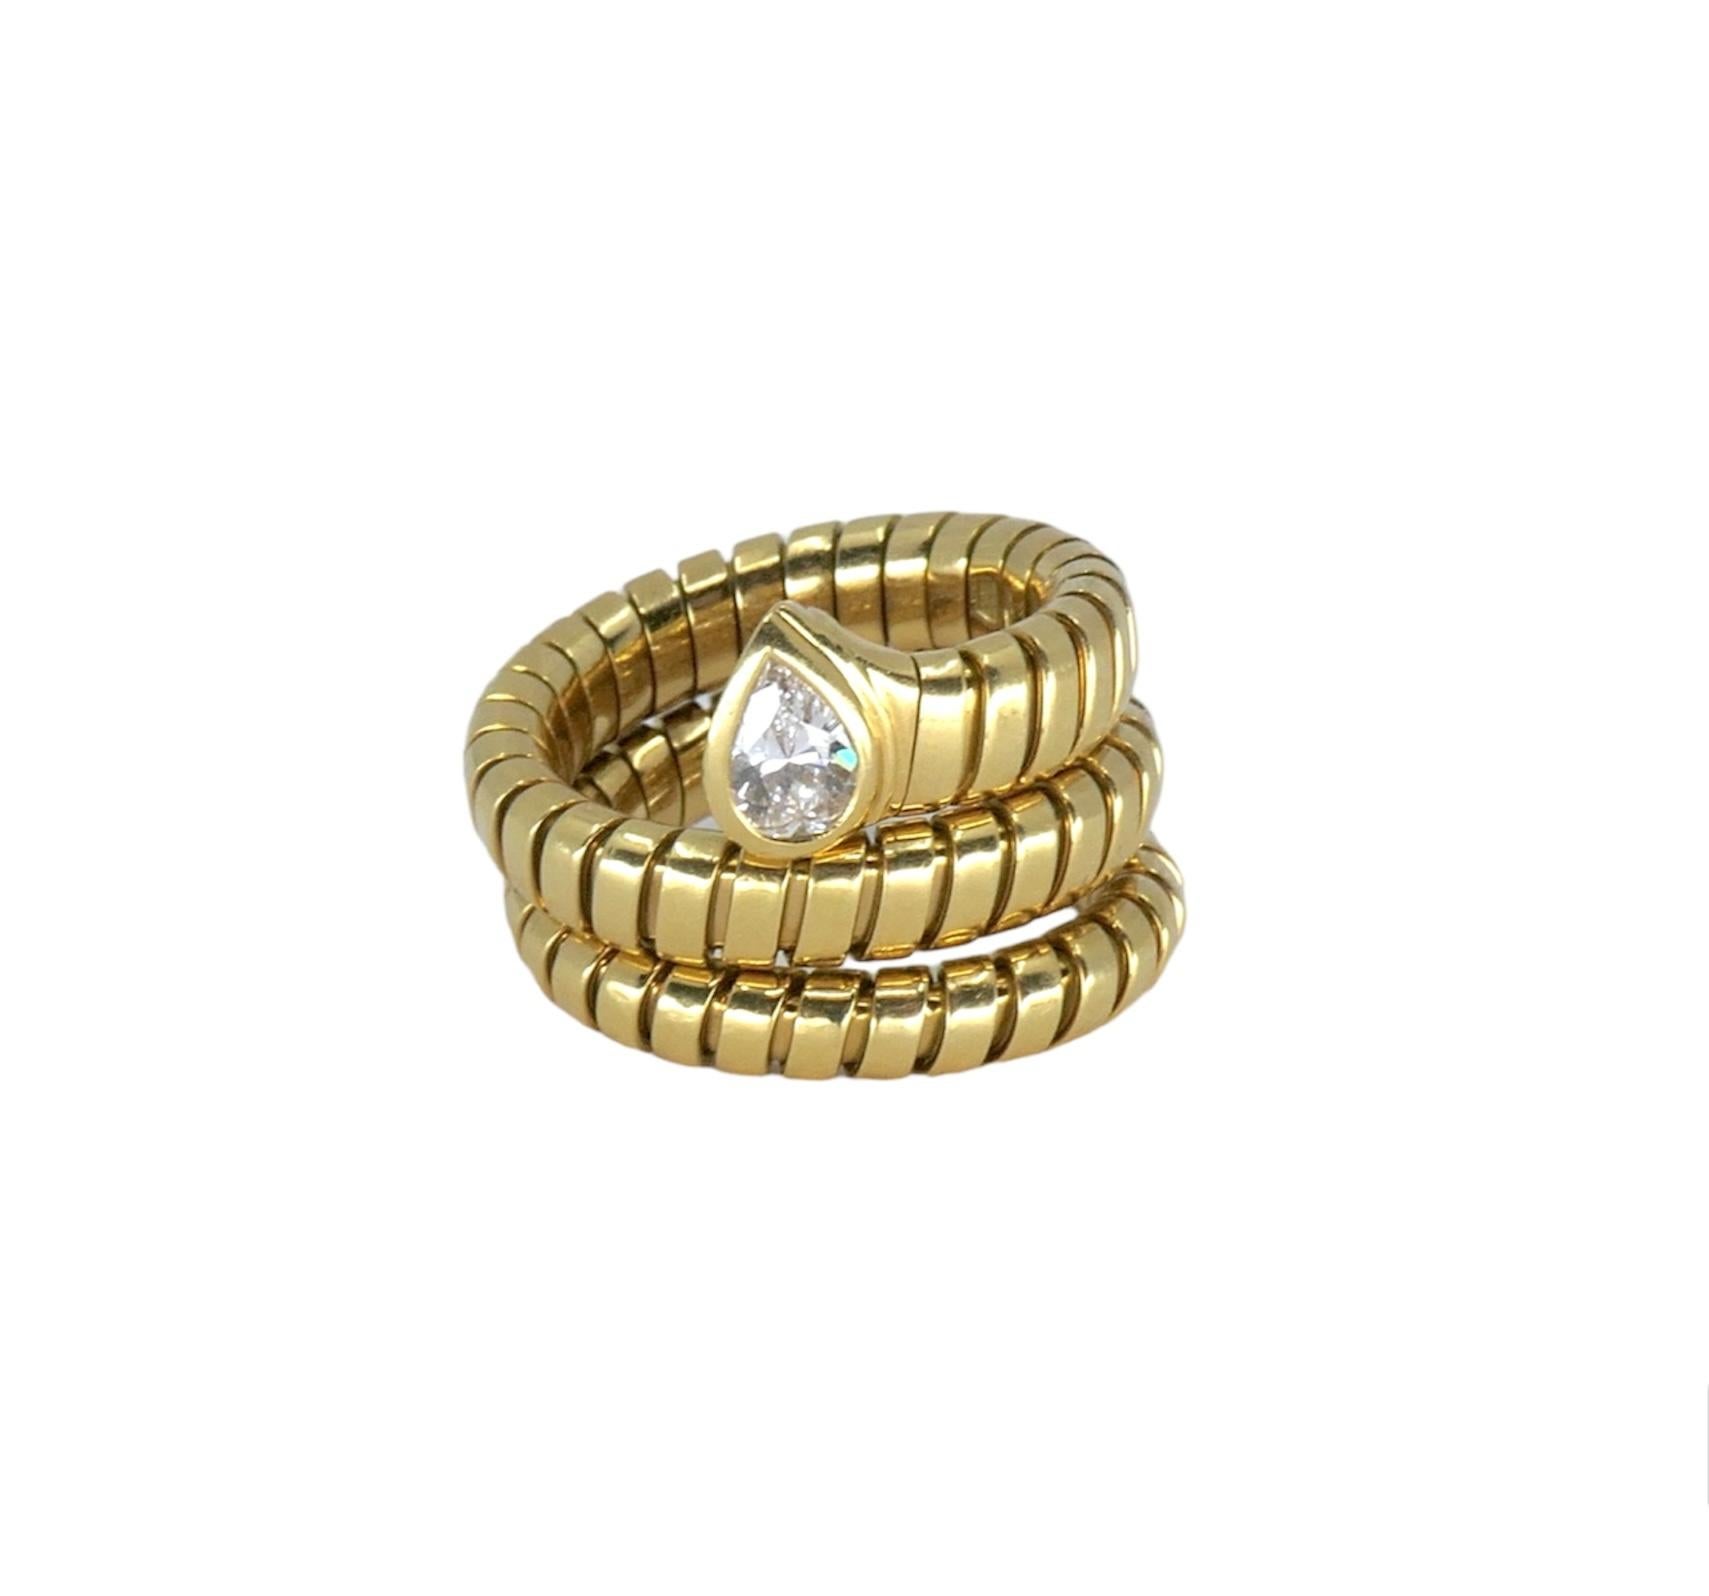 DISEÑADOR: Bulgari
circa: década de 1990
MATERIALES: Oro amarillo de 18 quilates
GEMA: 0,40 cts. Diamante
PESO: 16,1 gramos
TAMAÑO DEL ANILLO: 6,75 - 7,5
MARCA: BVLGARI, 750, Made in ITALY, *2337AL

Un entrañable anillo Serpenti Tubogas de Bulgari,